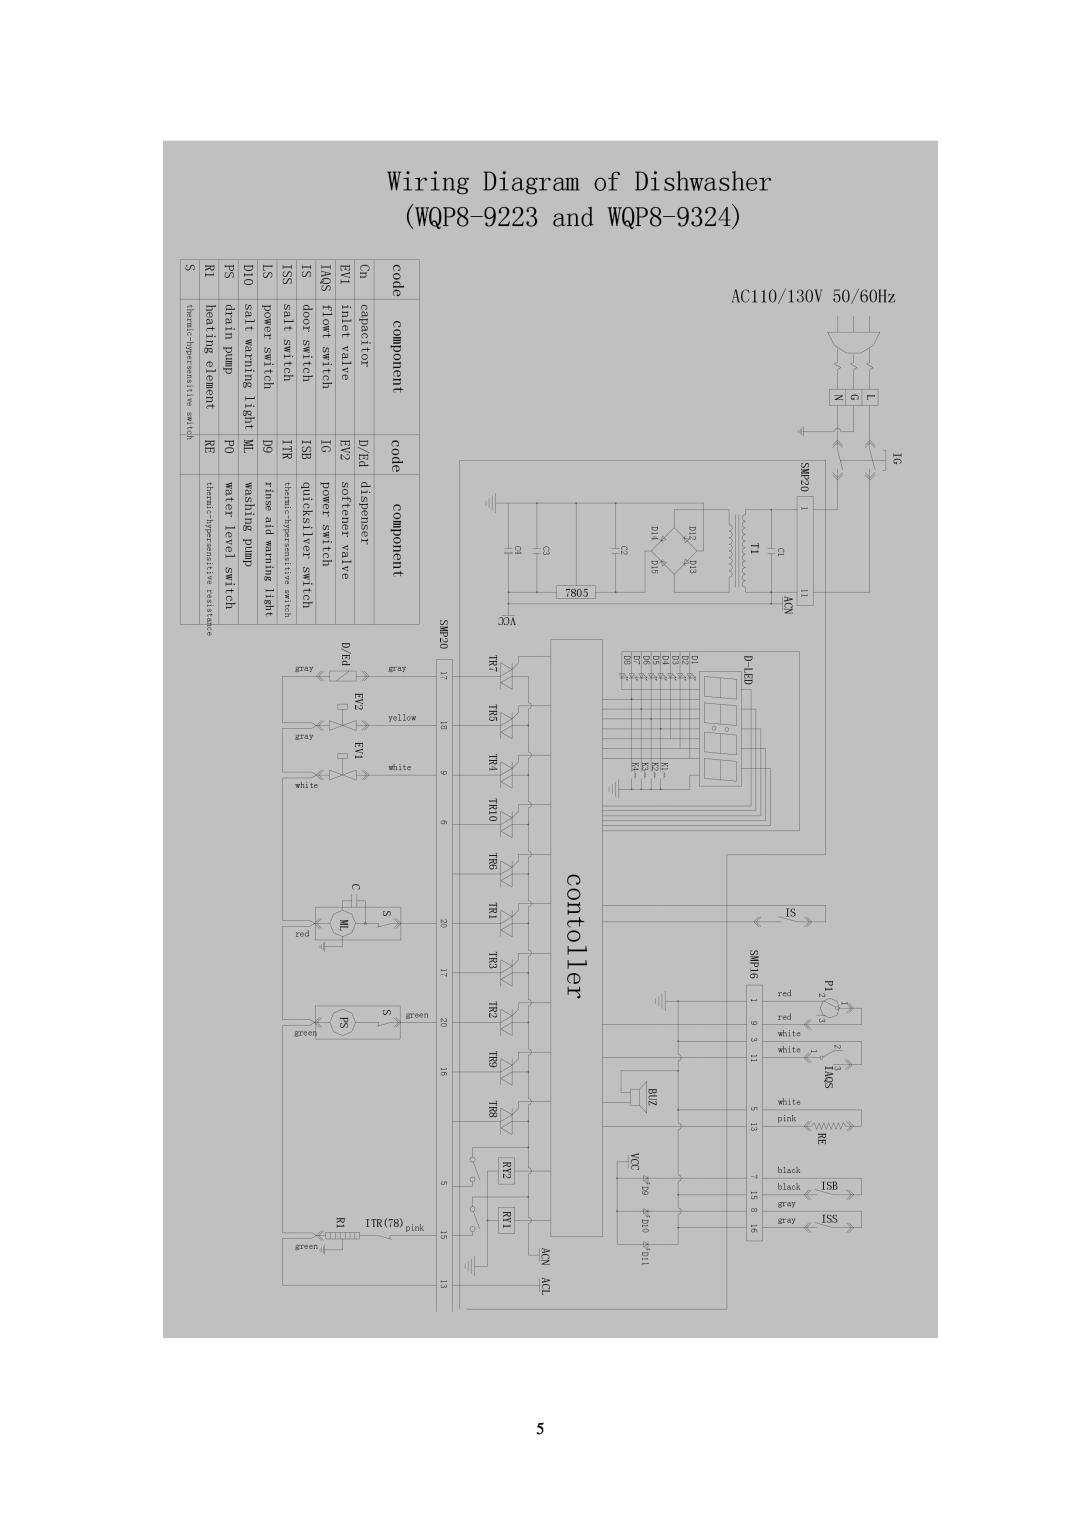 Equator SB 818, WB 818 service manual WQP8-9223and WQP8-9324, Wiring Diagram of Dishwasher, AC110/130V 50/60Hz 